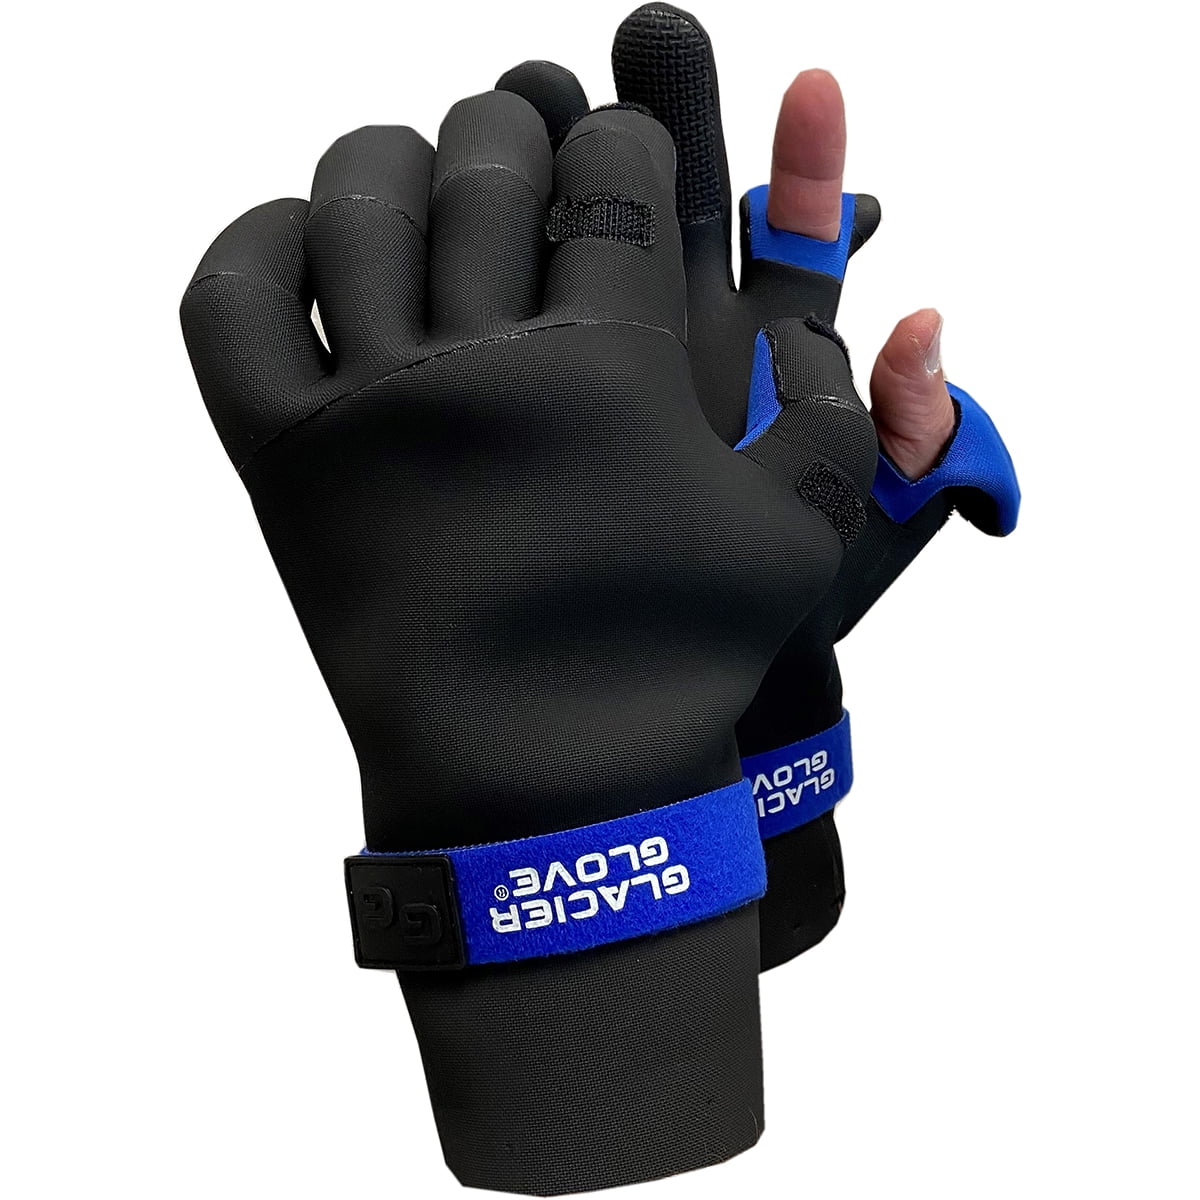 Glacier Glove Pro Angler Glove Waterproof Fleece Lined Neoprene Fishing Gloves 